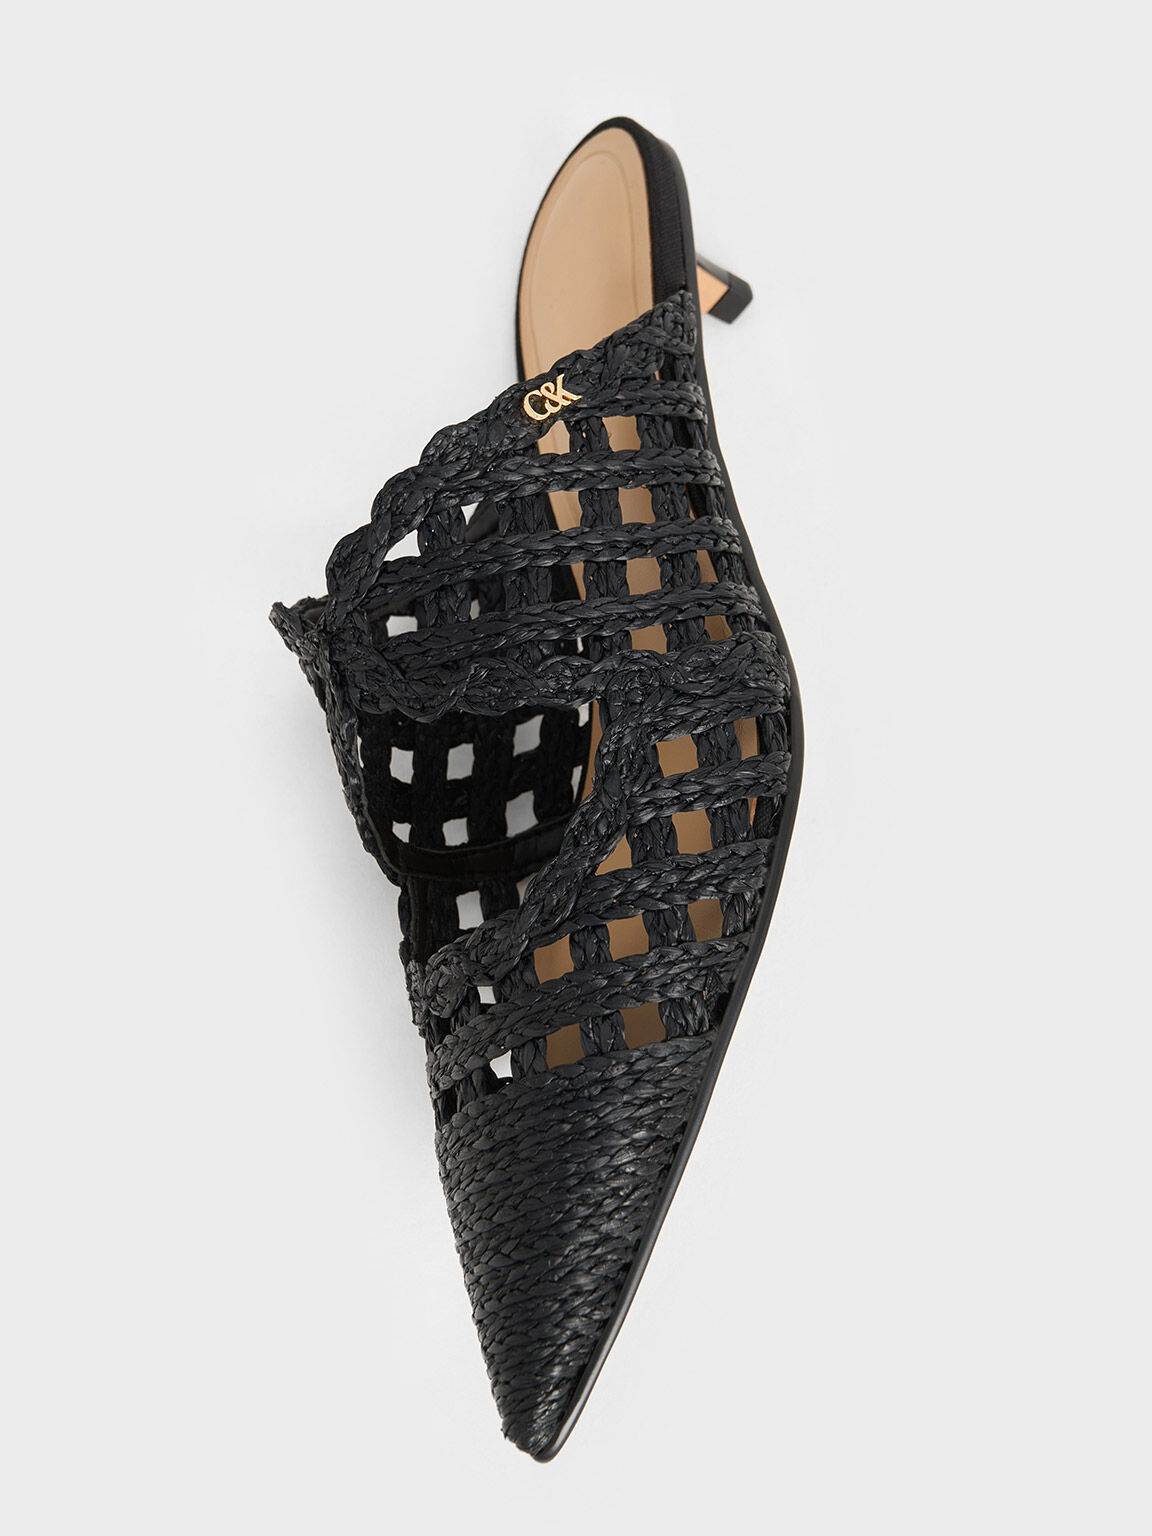 Sepatu Mules Pointed-Toe Kitten-Heel Raffia, Black Textured, hi-res